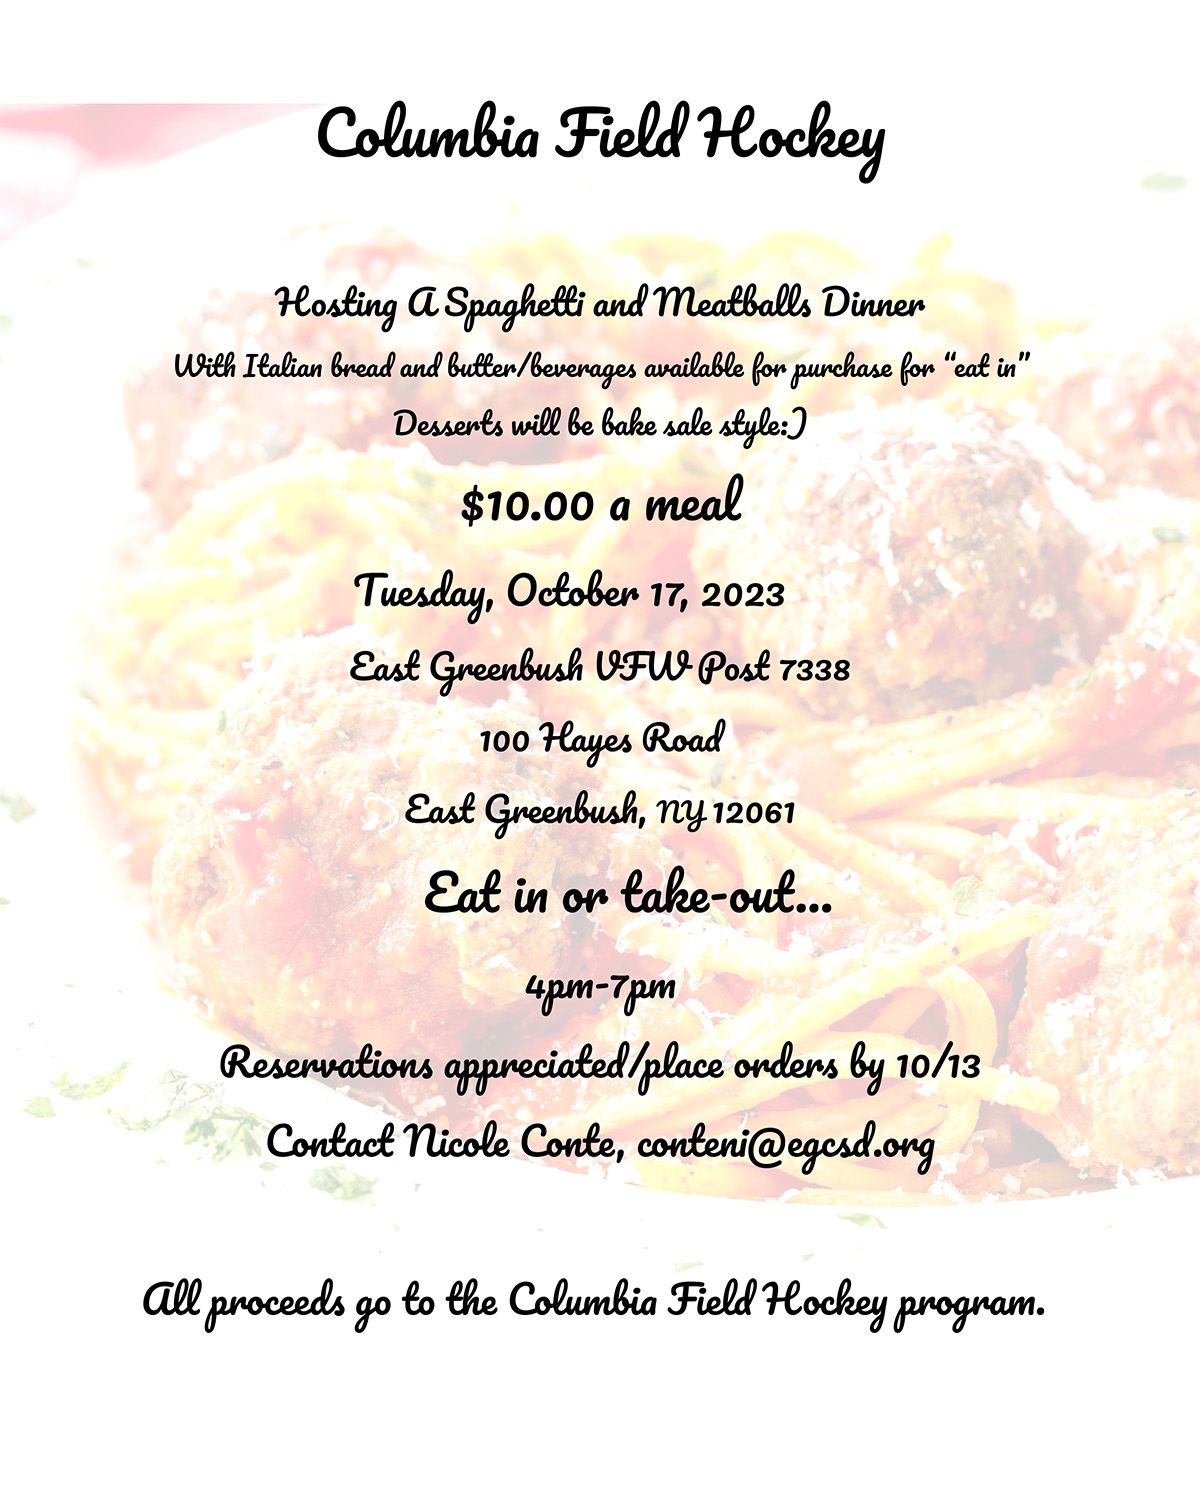 Columbia Field Hockey Spaghetti Dinner Fundraiser